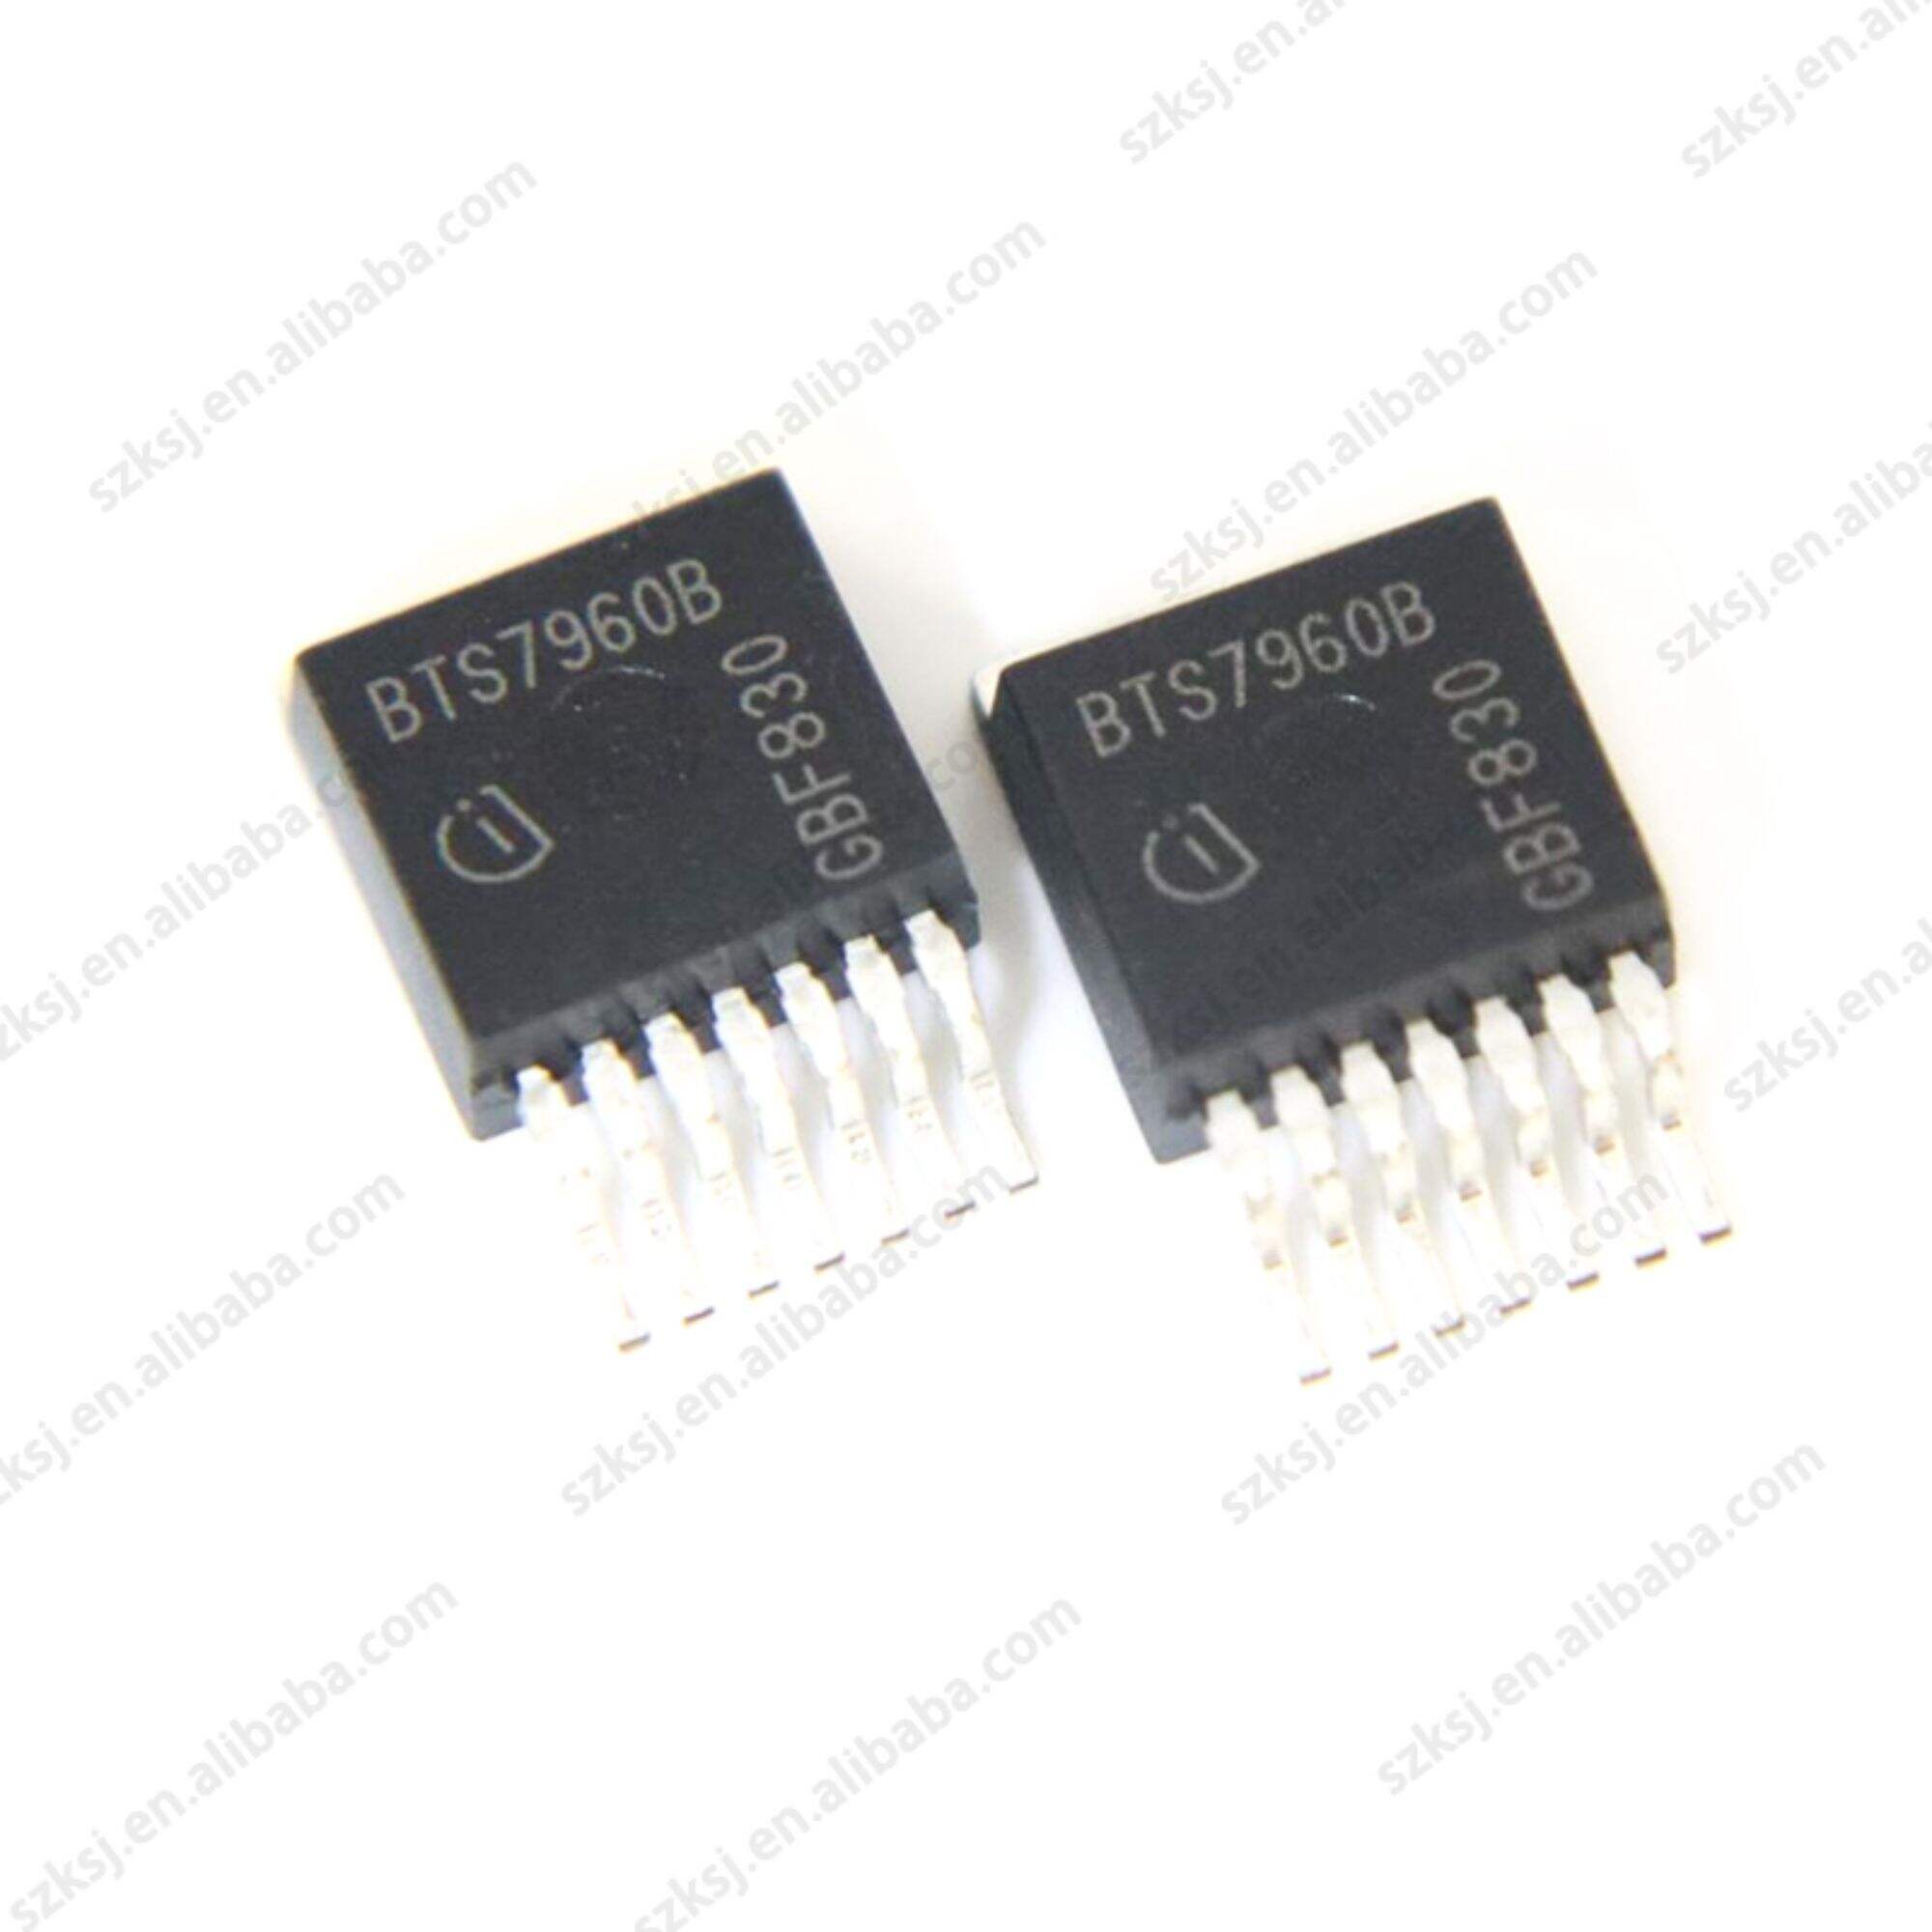 BTS7960B new original spot bridge motor driver chip TO263-7 integrated circuit IC